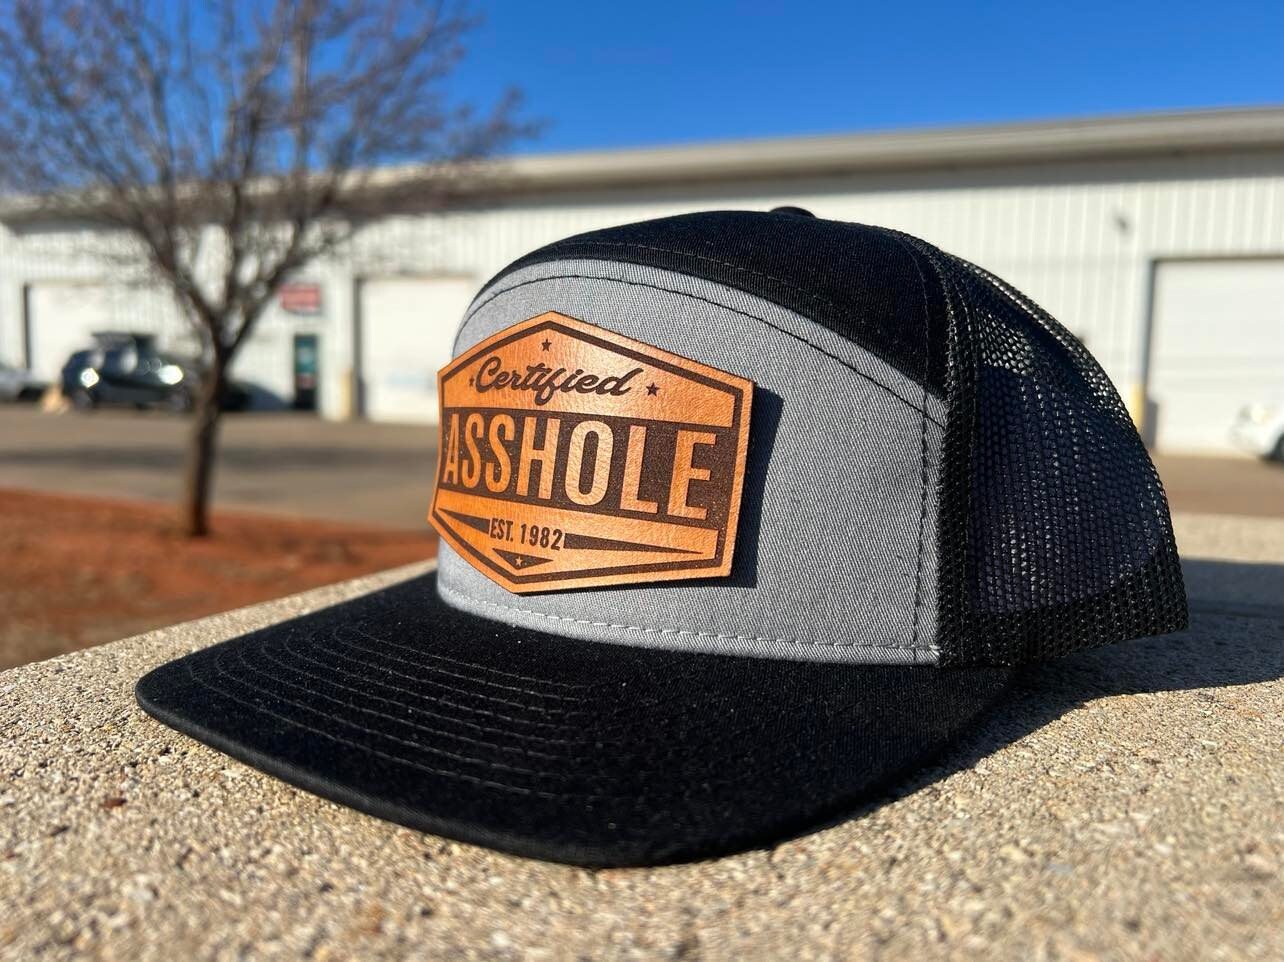 Certified ASSHOLE leather patch flat bill custom hat